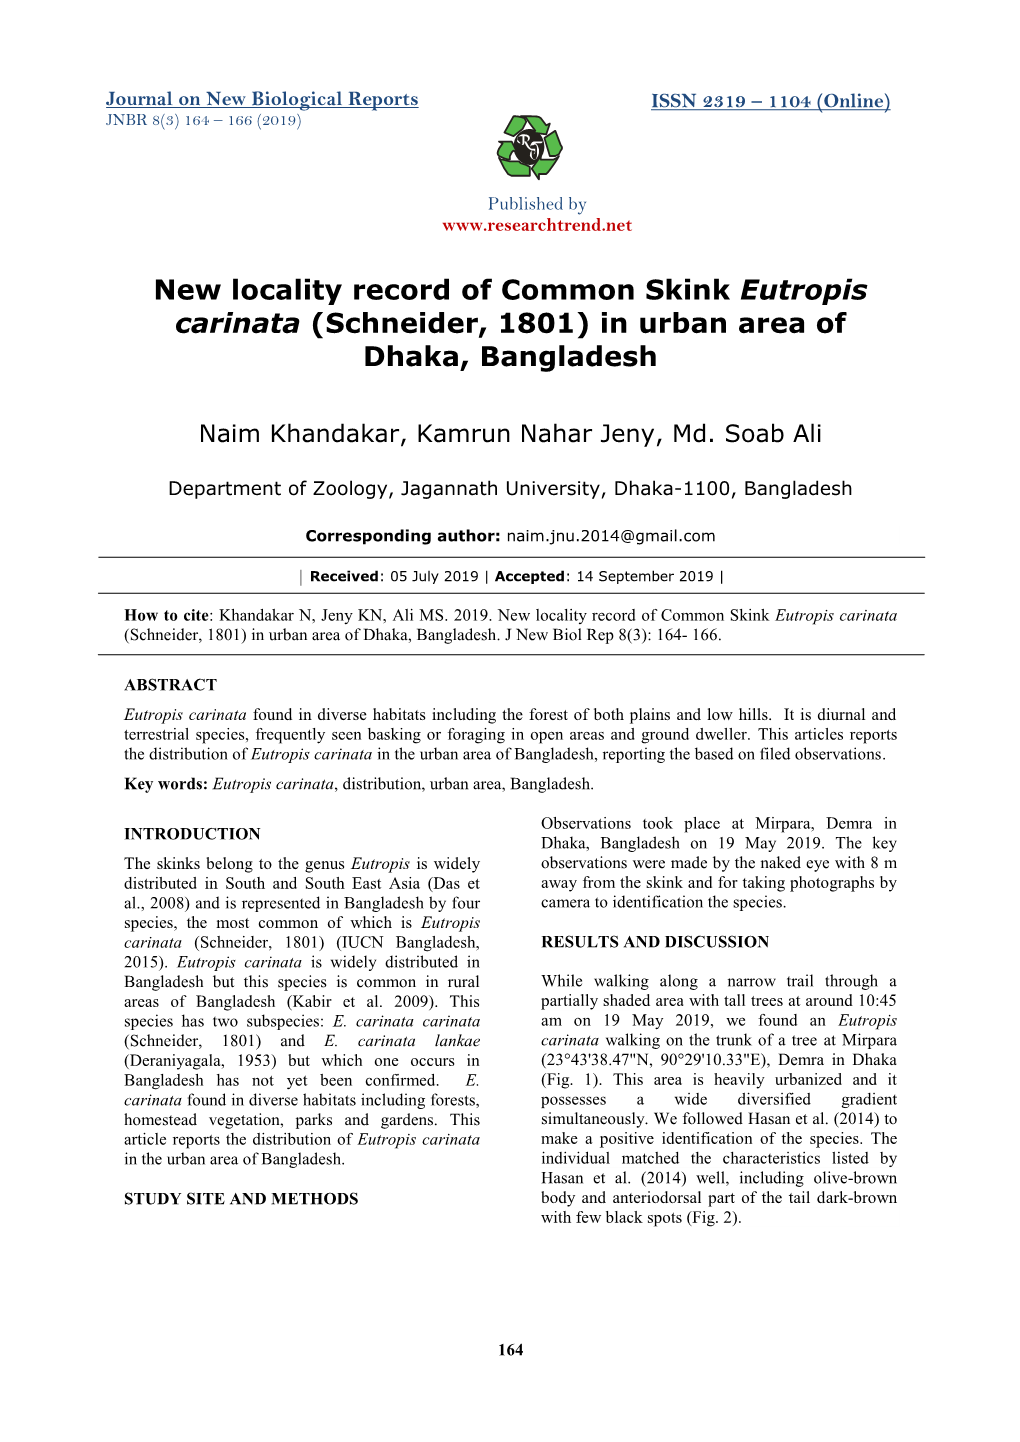 New Locality Record of Common Skink Eutropis Carinata (Schneider, 1801) in Urban Area of Dhaka, Bangladesh